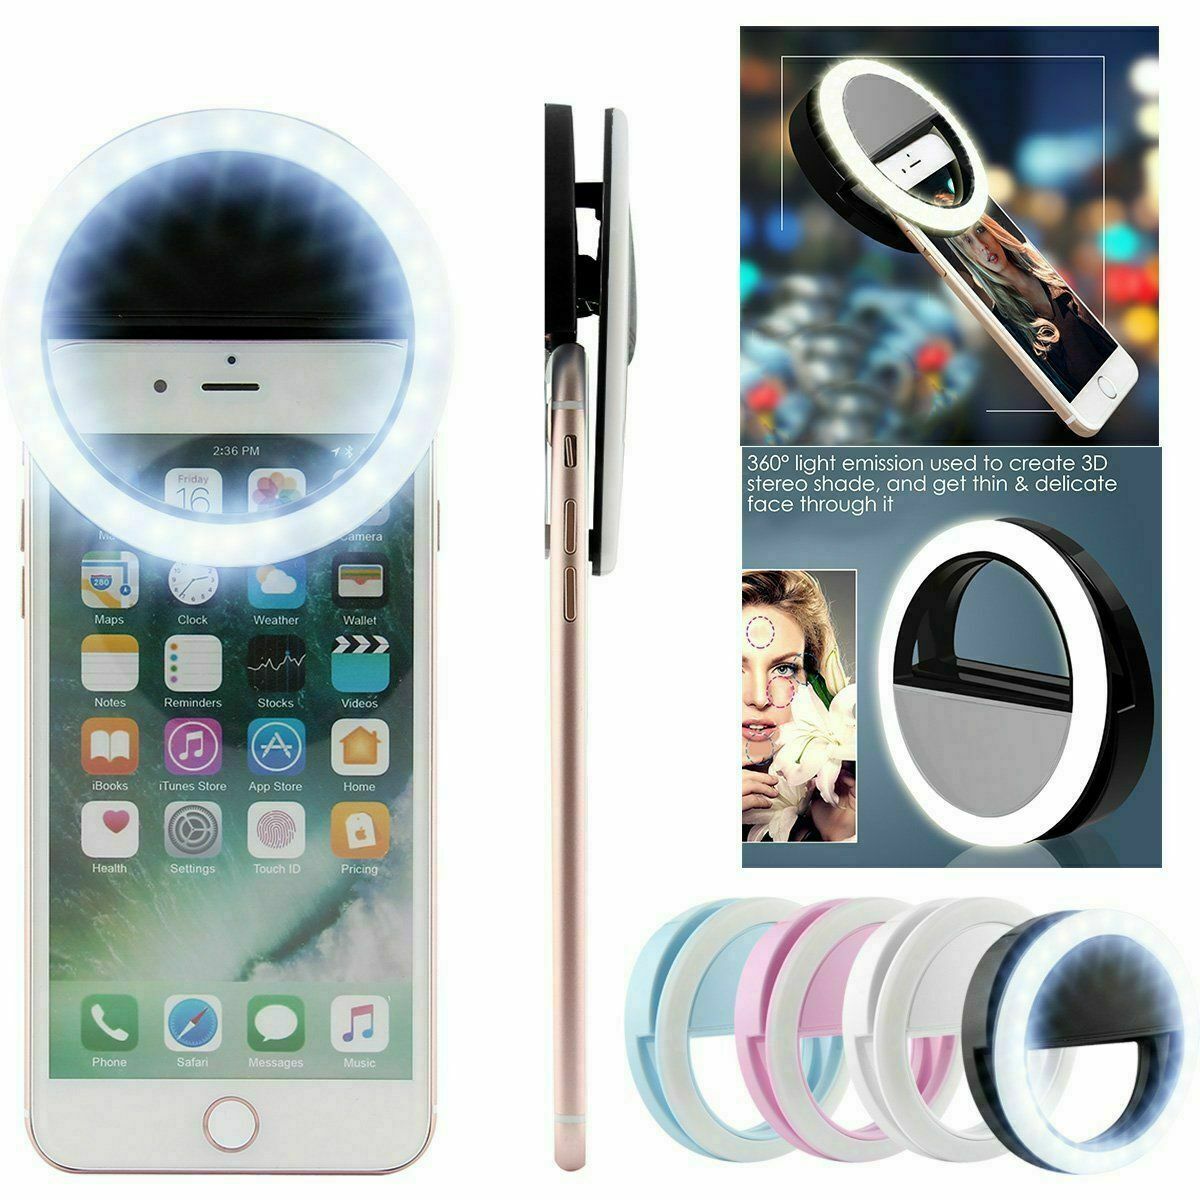 AUTOPkio Selfie Ring Light, 36 LED Light Ring USB Ricaricabile Regolabile 3 Livelli Luminosità con Clip per Smartphone Webcast Youtube Tiktok (rosa)